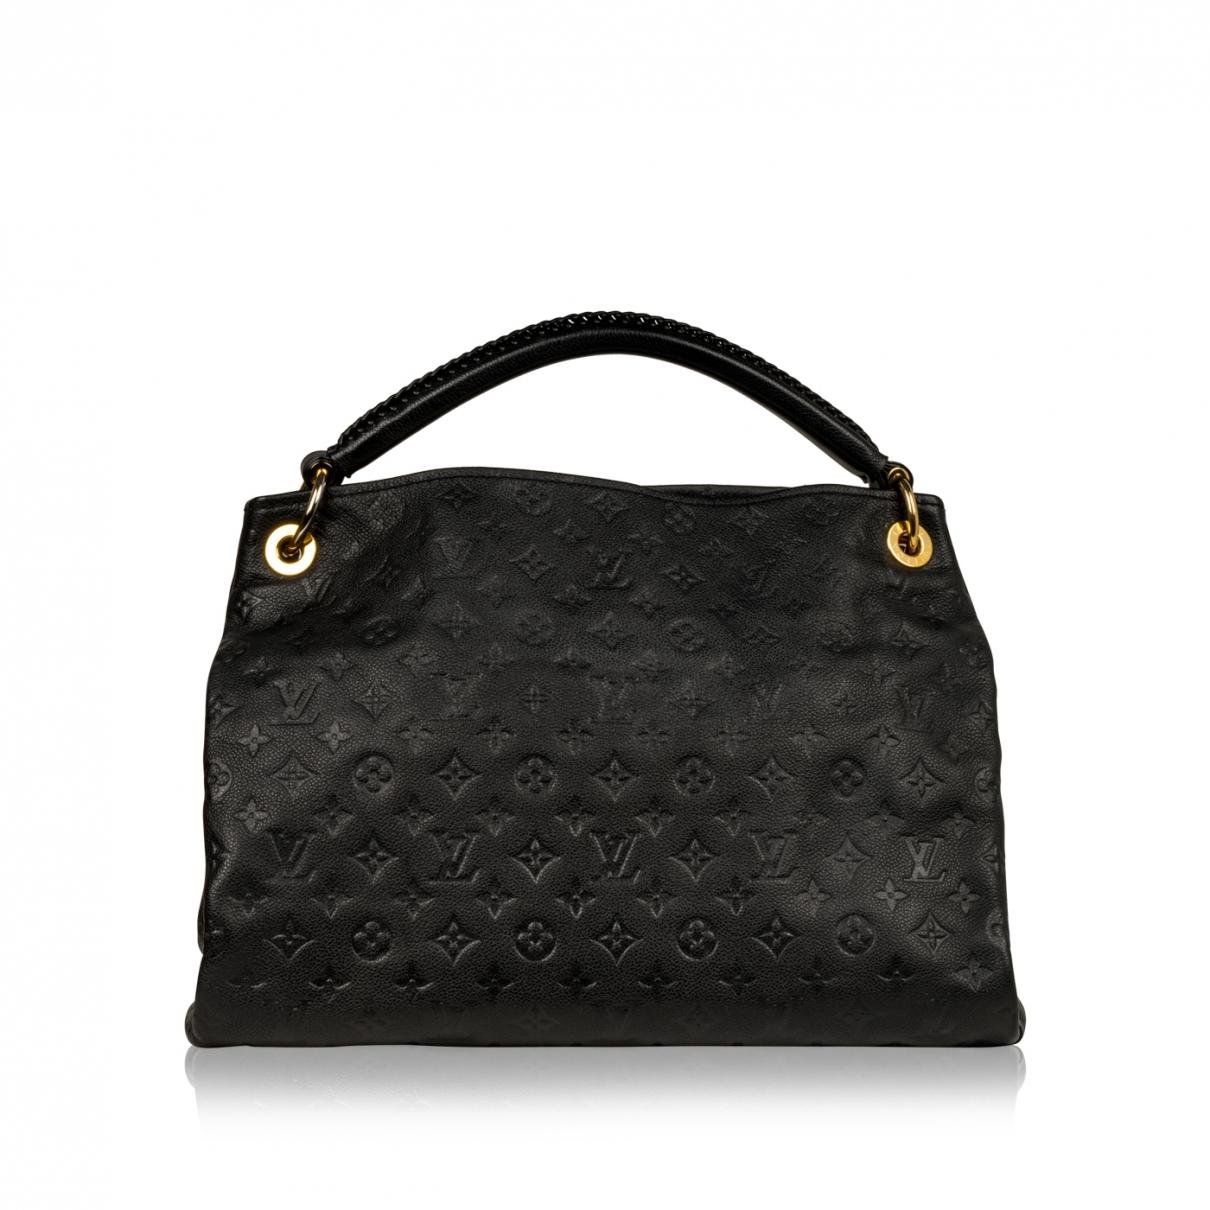 Louis Vuitton Artsy Black Leather Handbag in Black - Lyst